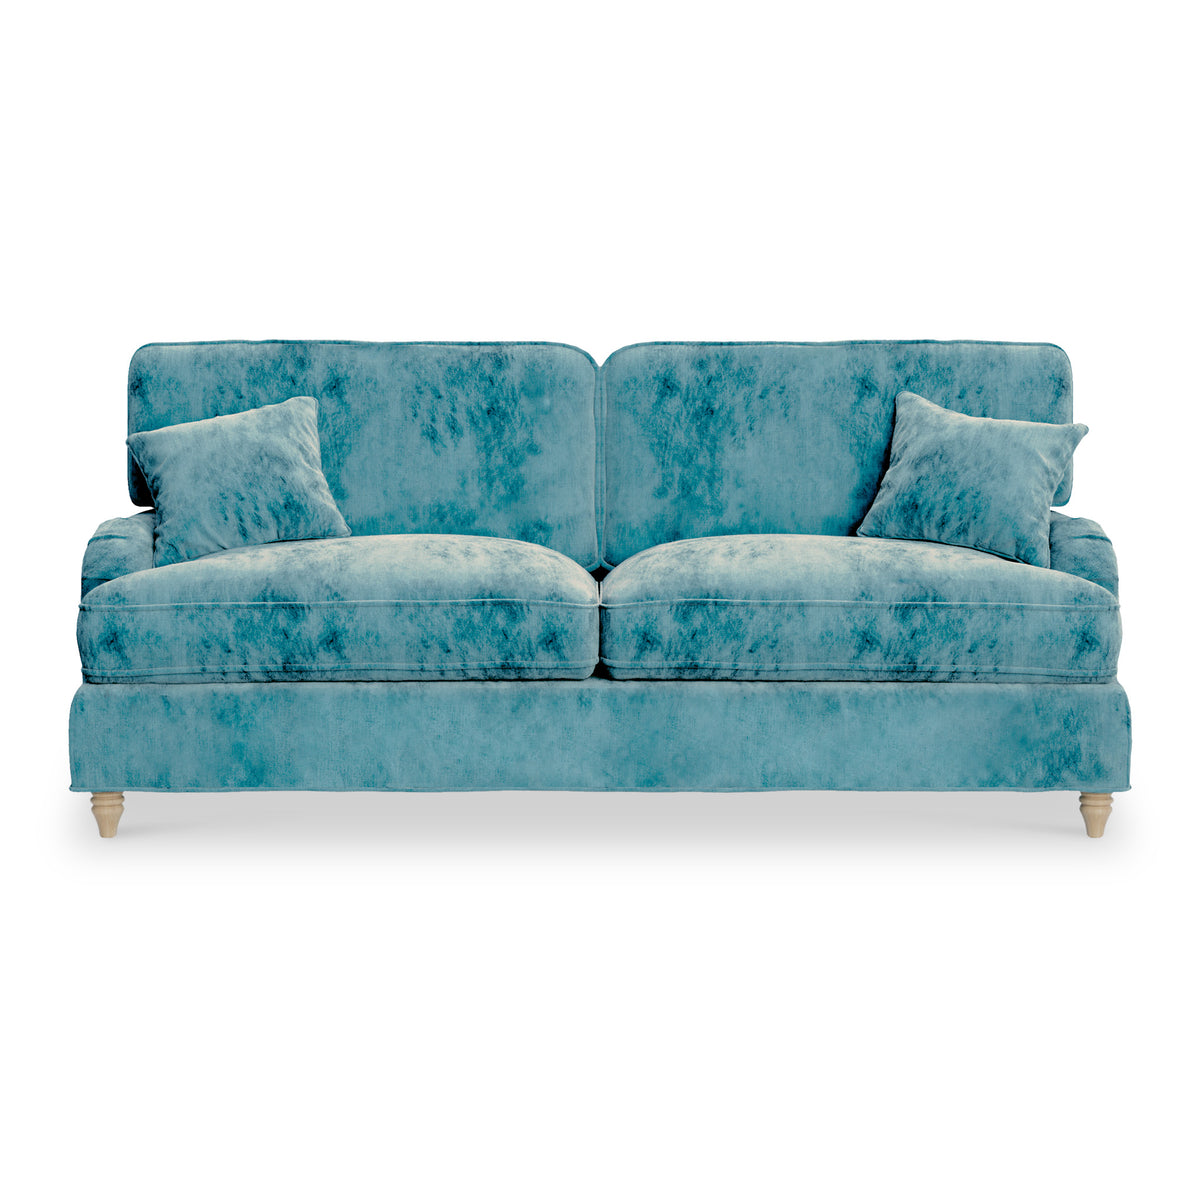 Arthur Lagoon 4 Seater Sofa from Roseland Furniture